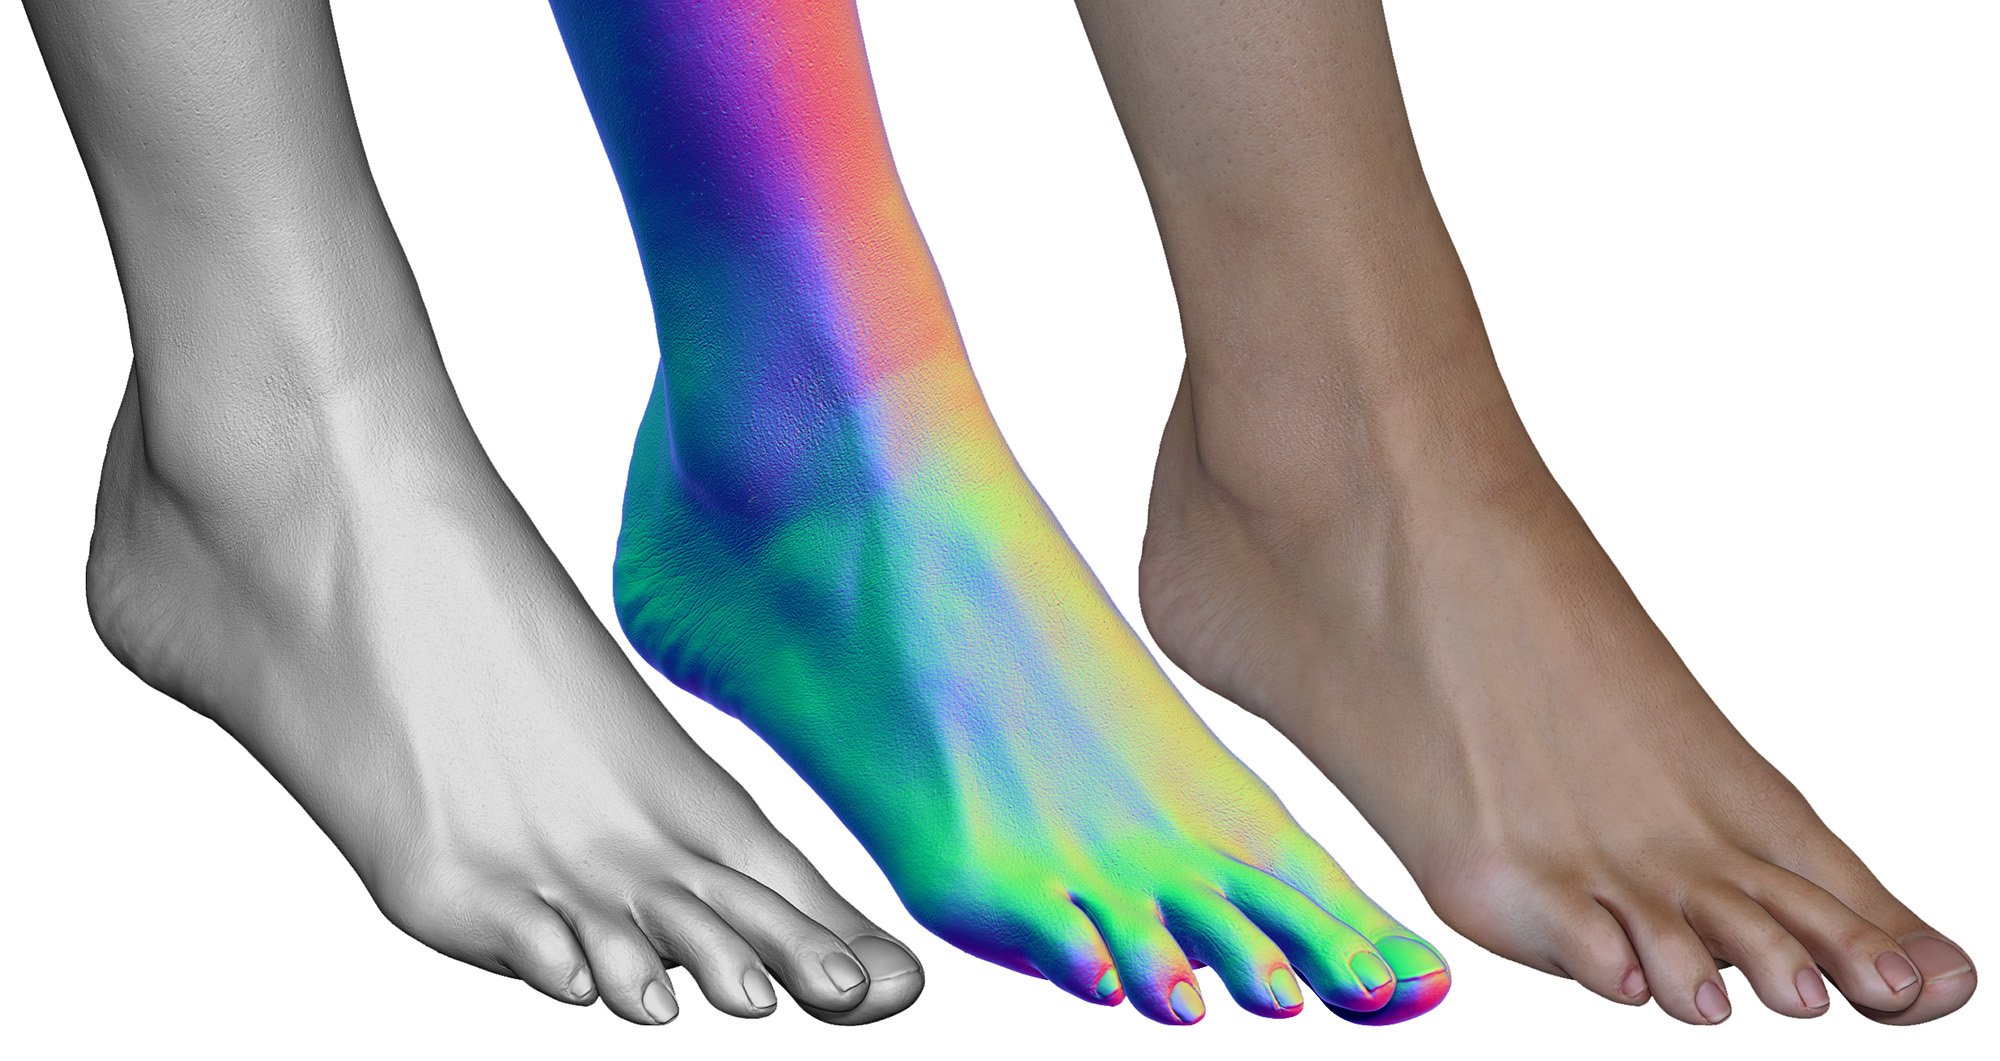 3 X Female Feet Scans